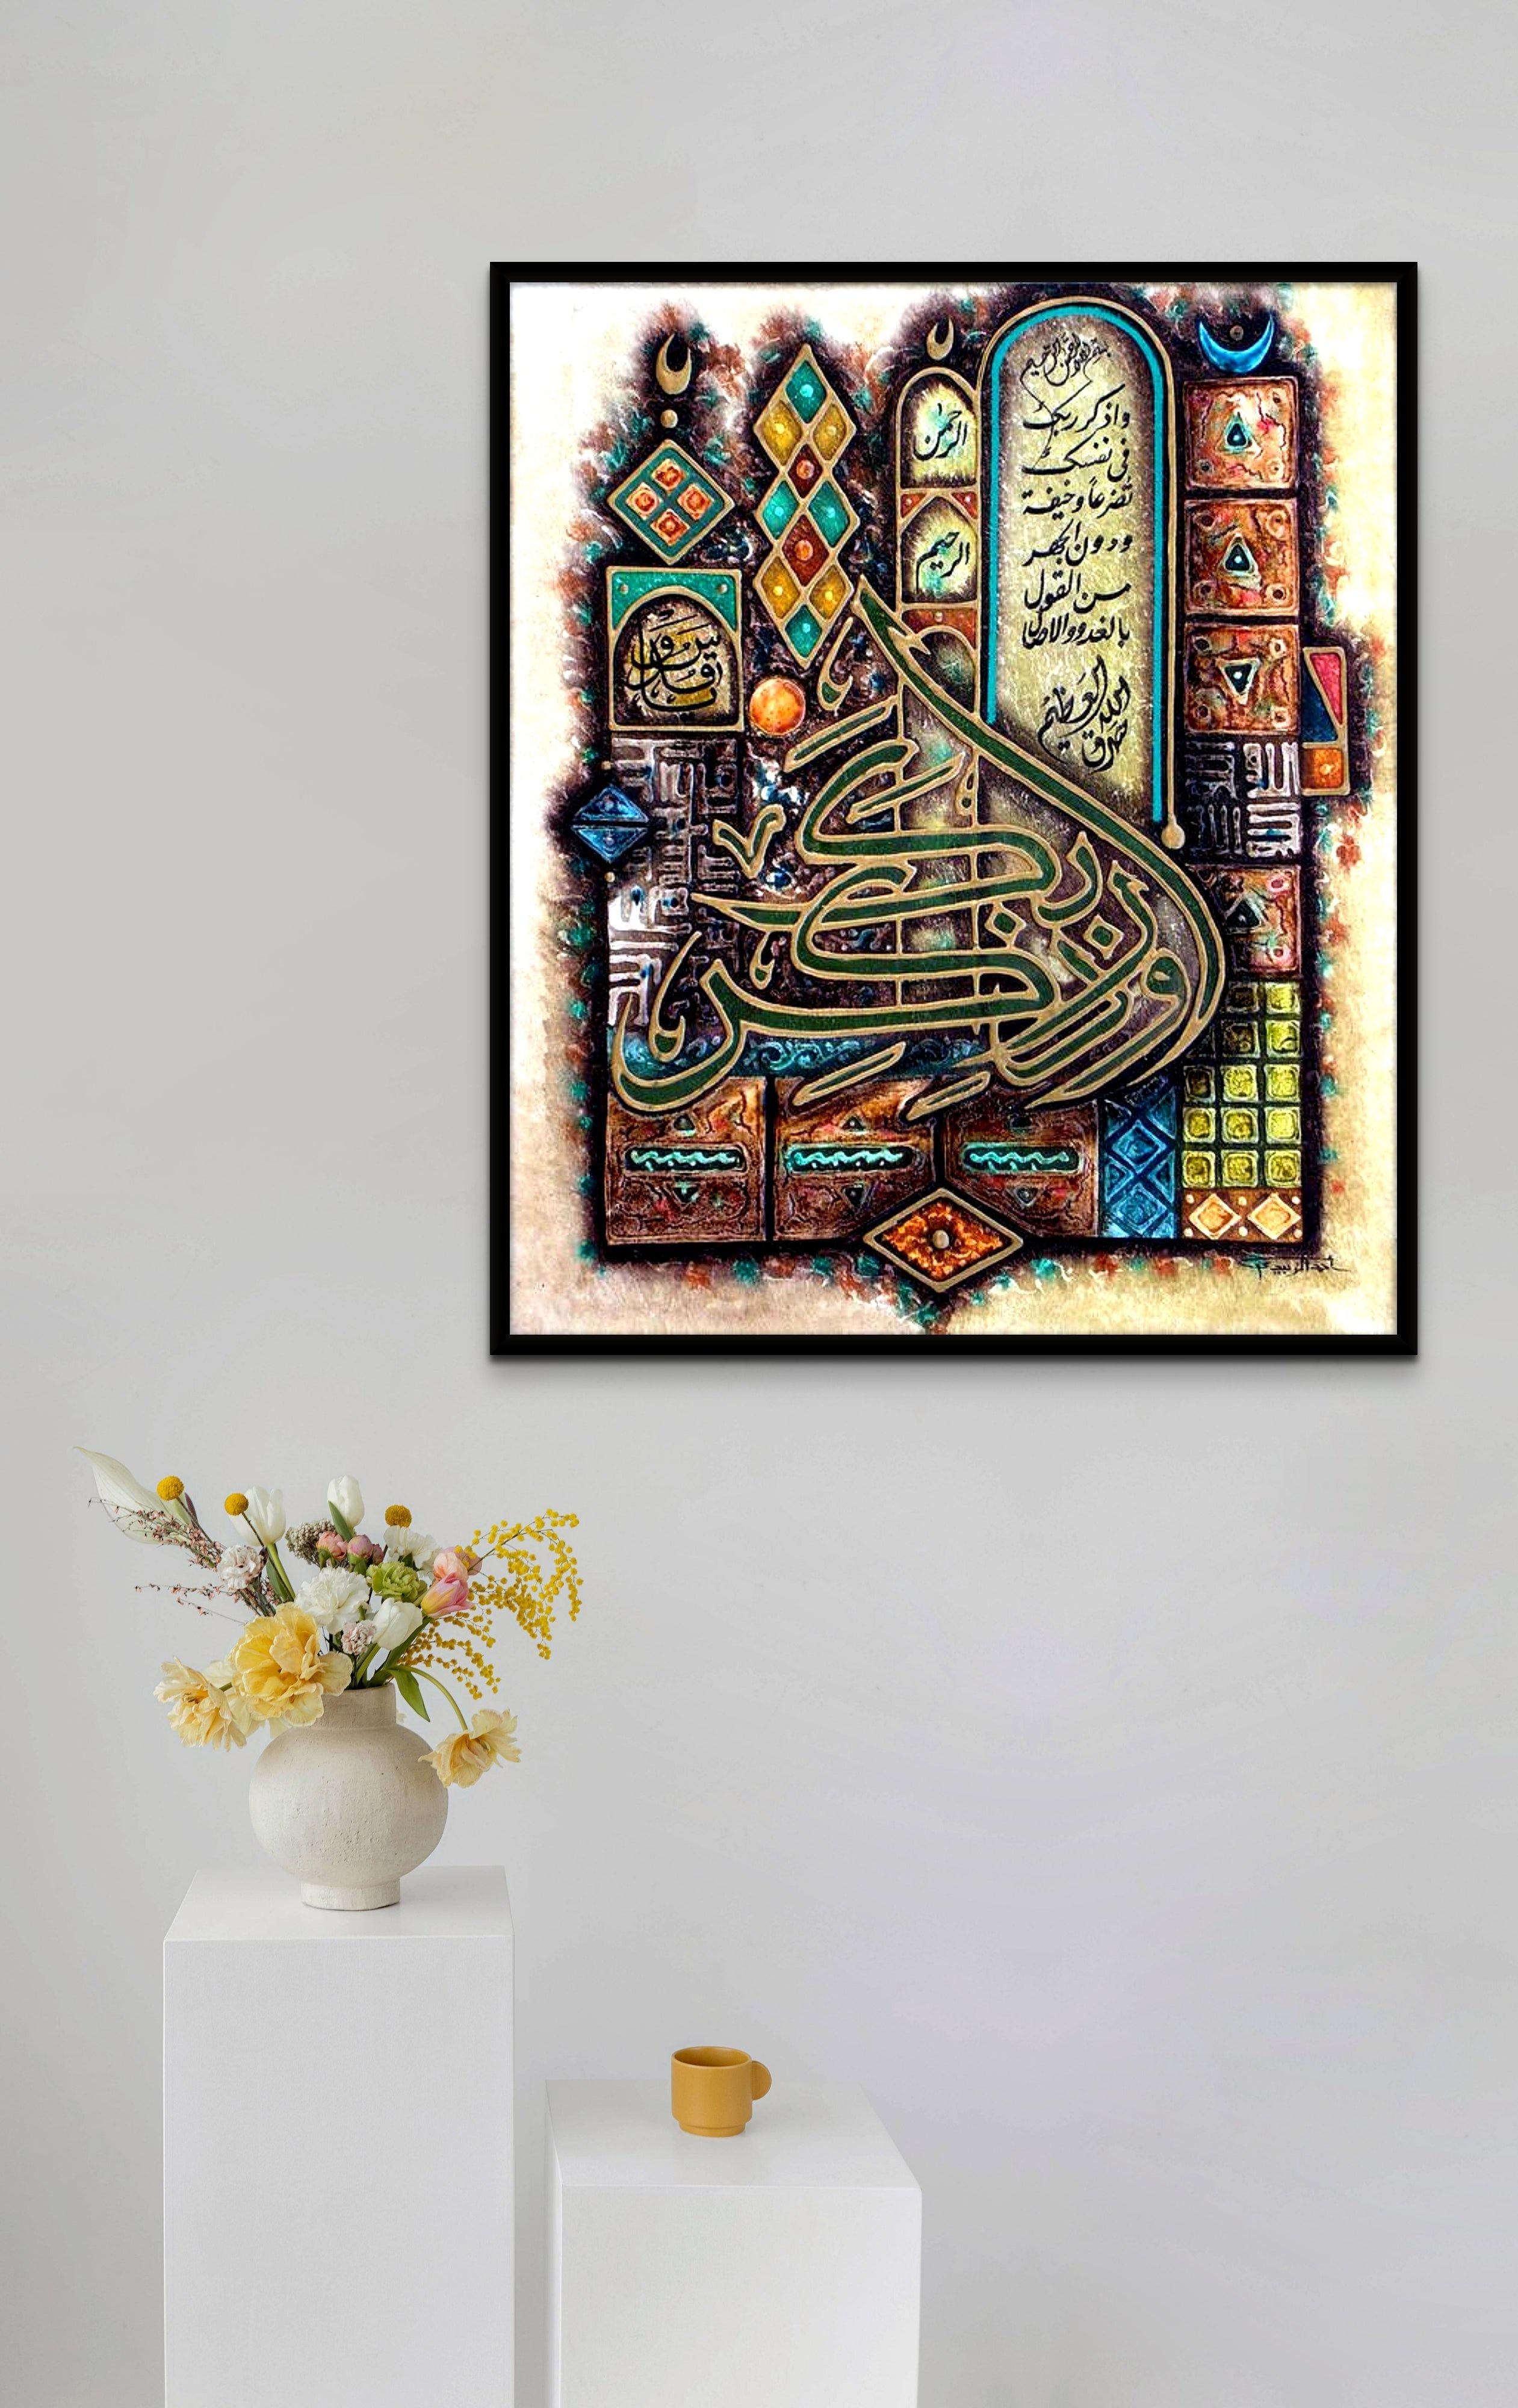 Framed Arabic Calligraphy - Islamic Art Ltd